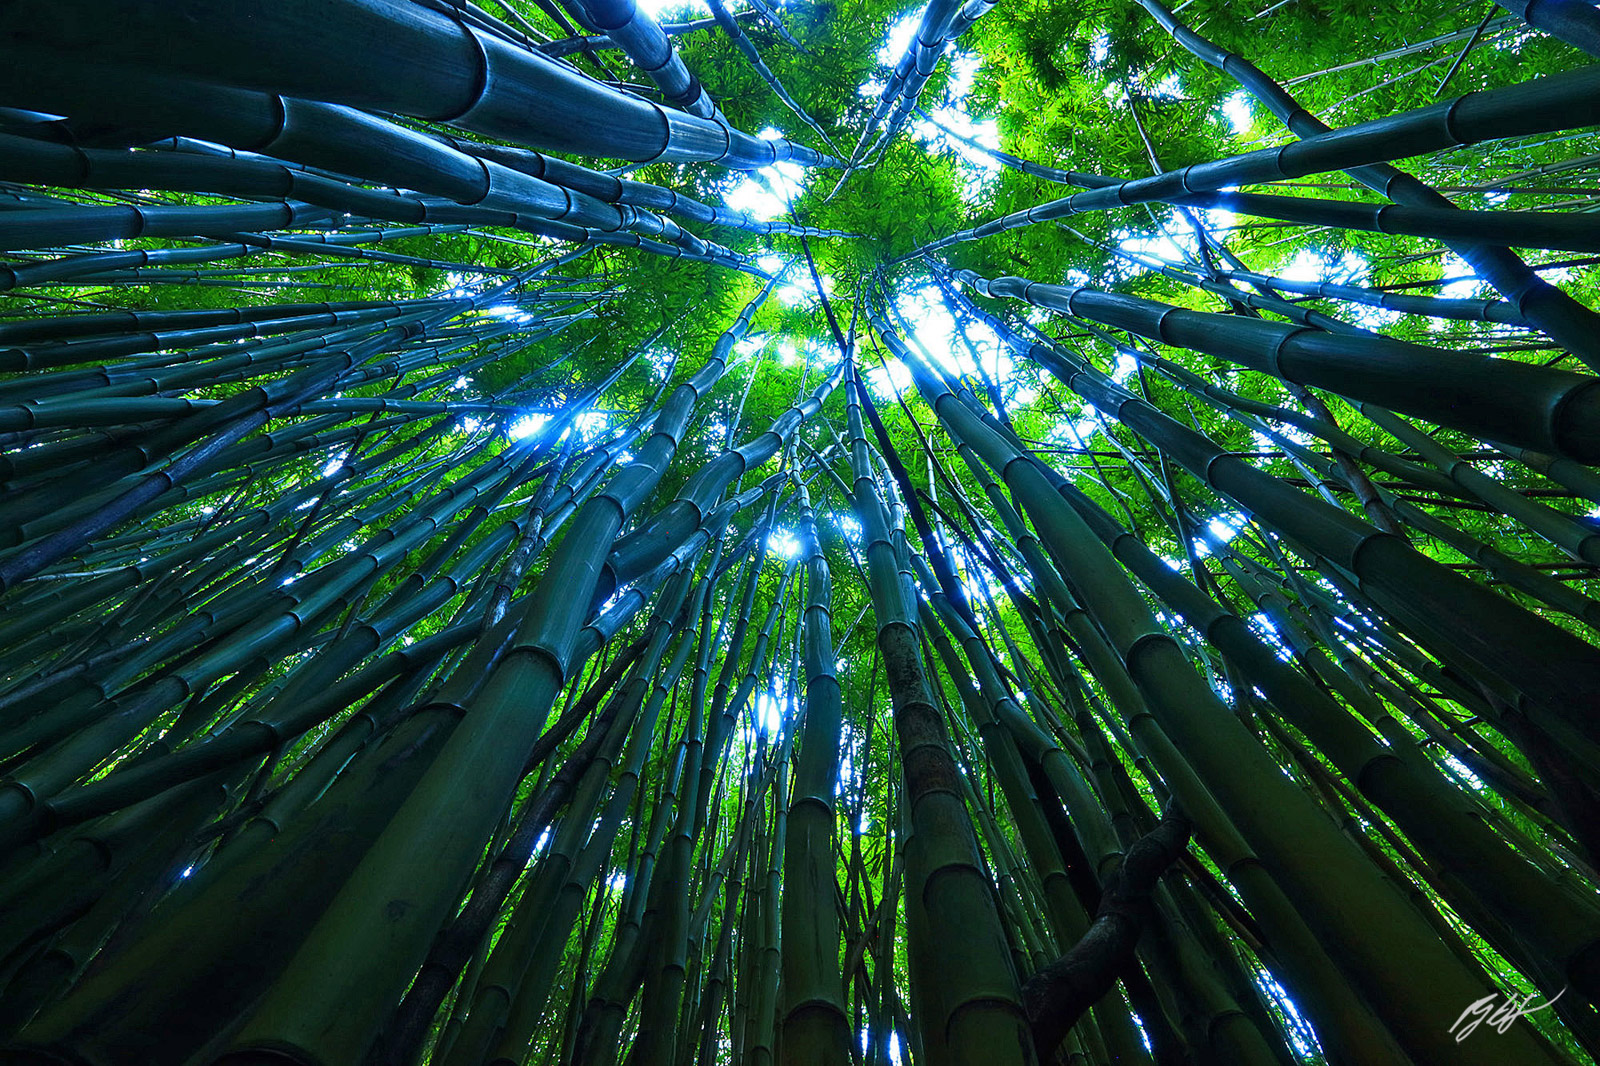 Giant Bamboo Forest in Haleakala National Park on the Island of Maui, Hawaii